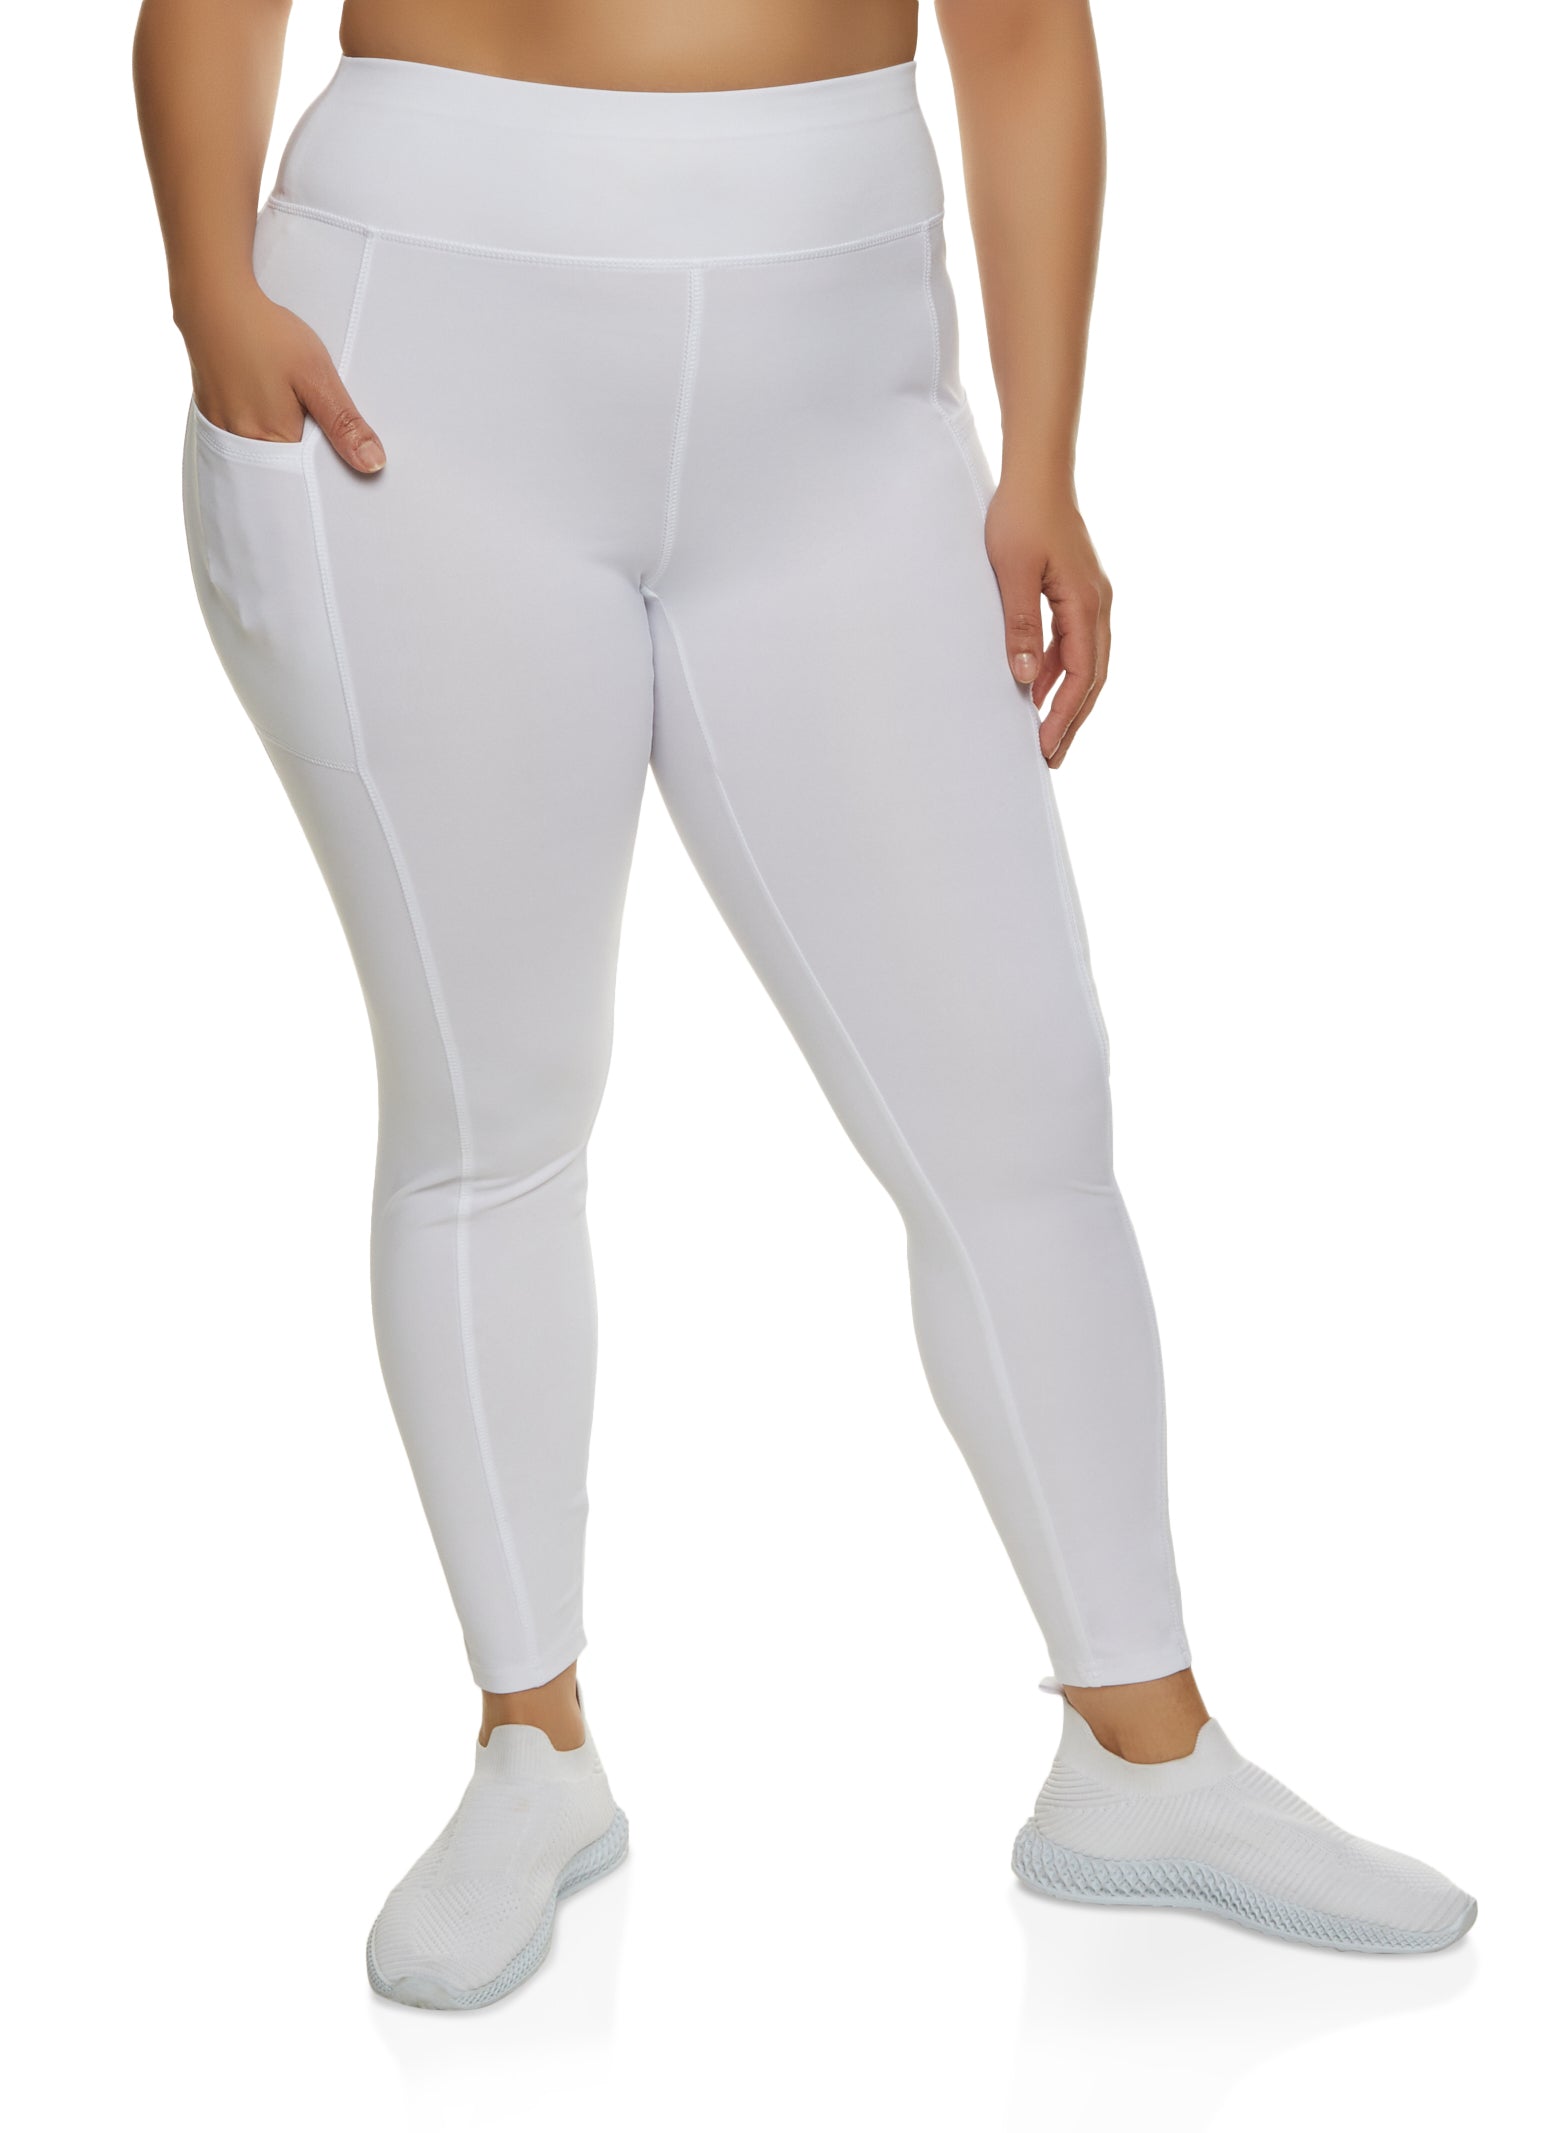 Women's Casual Regular White Long Plus Size Leggings 4XL (20) 